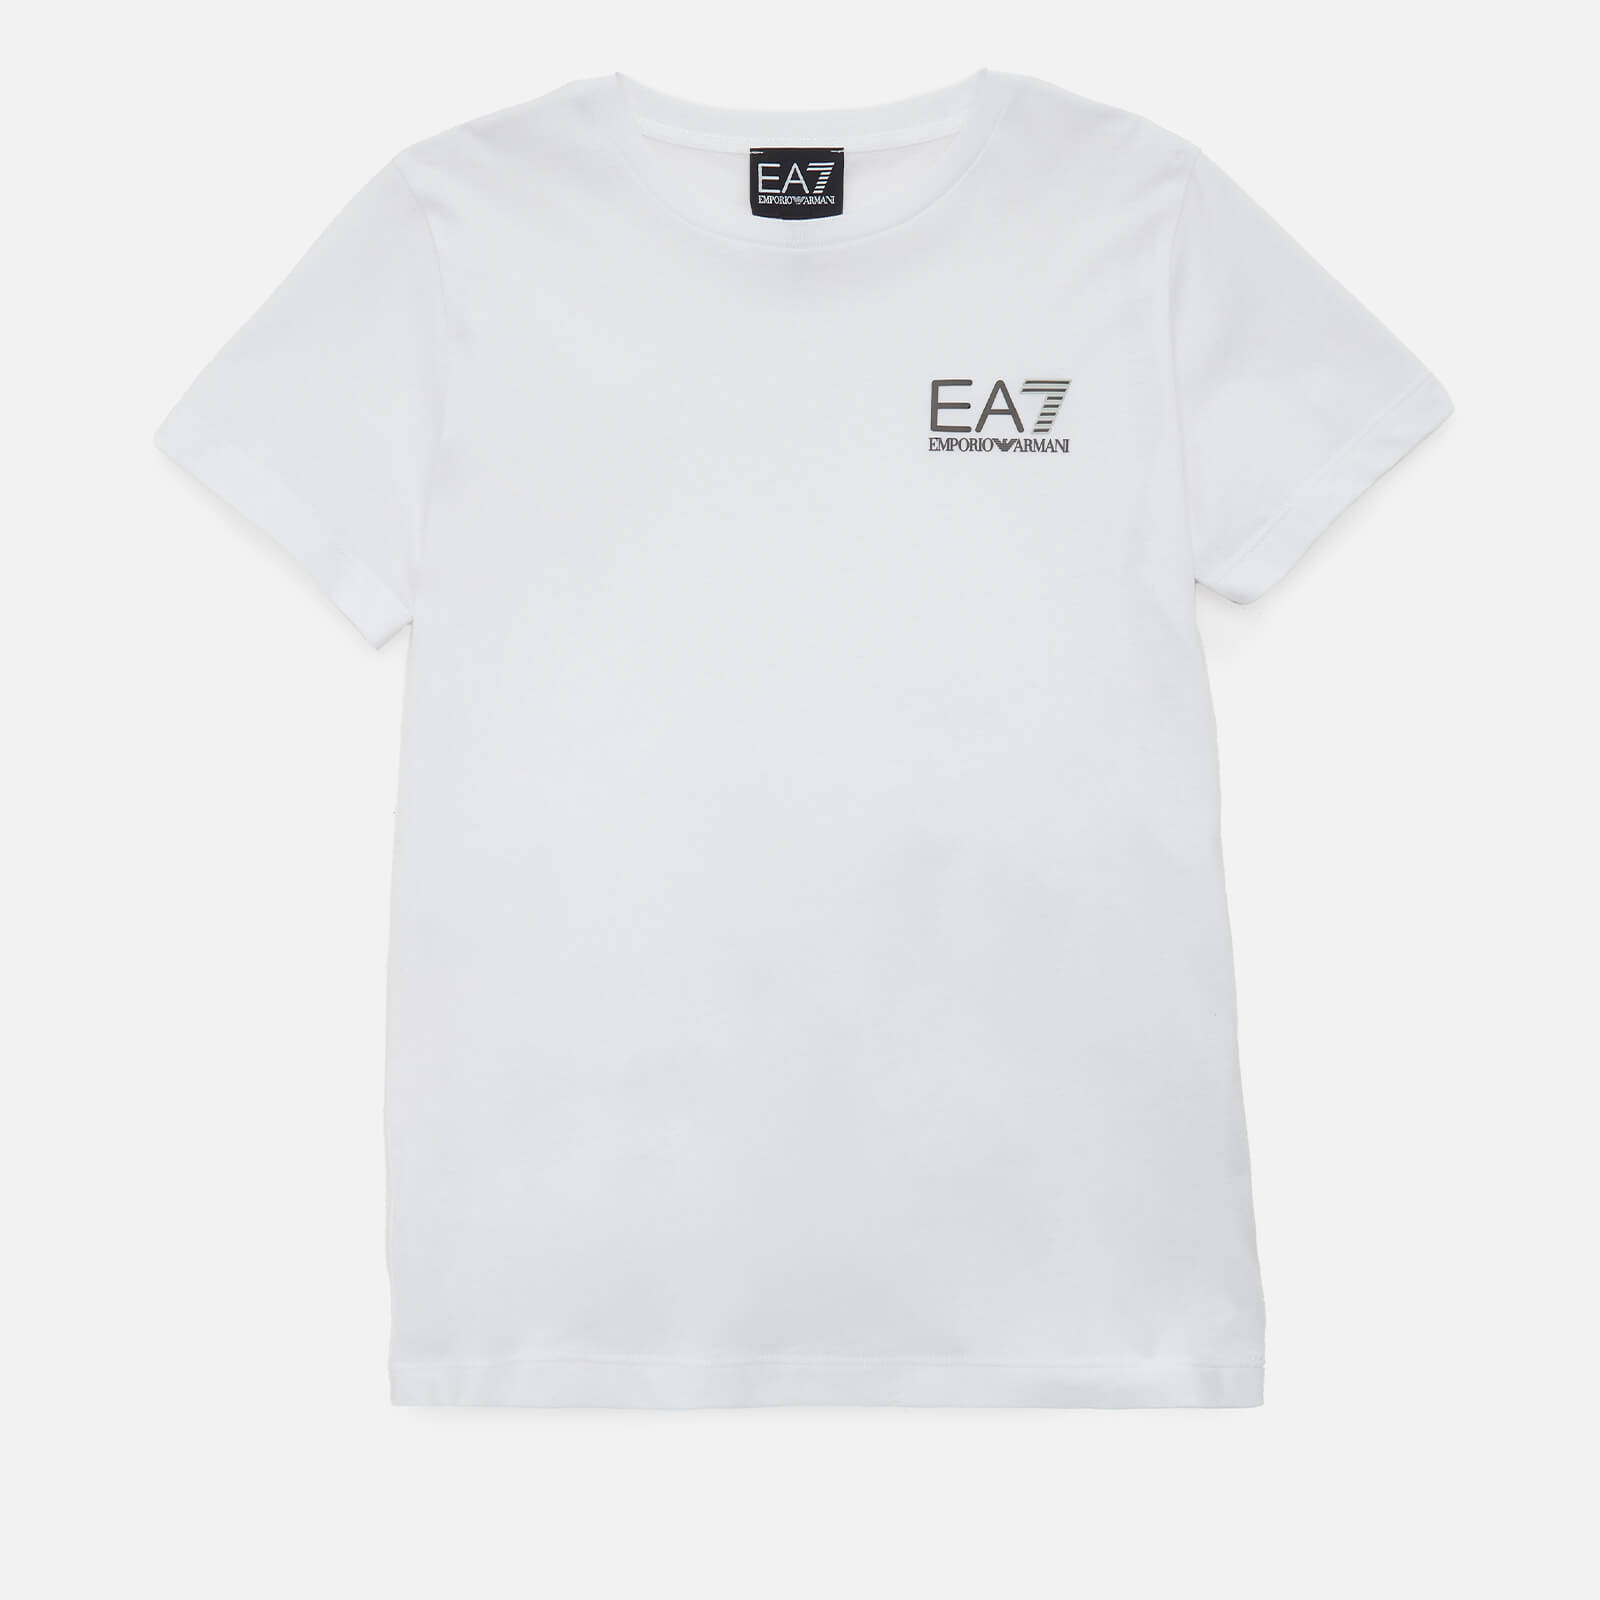 Ea7 Boys' Core Identity T-Shirt - White - 10 Years